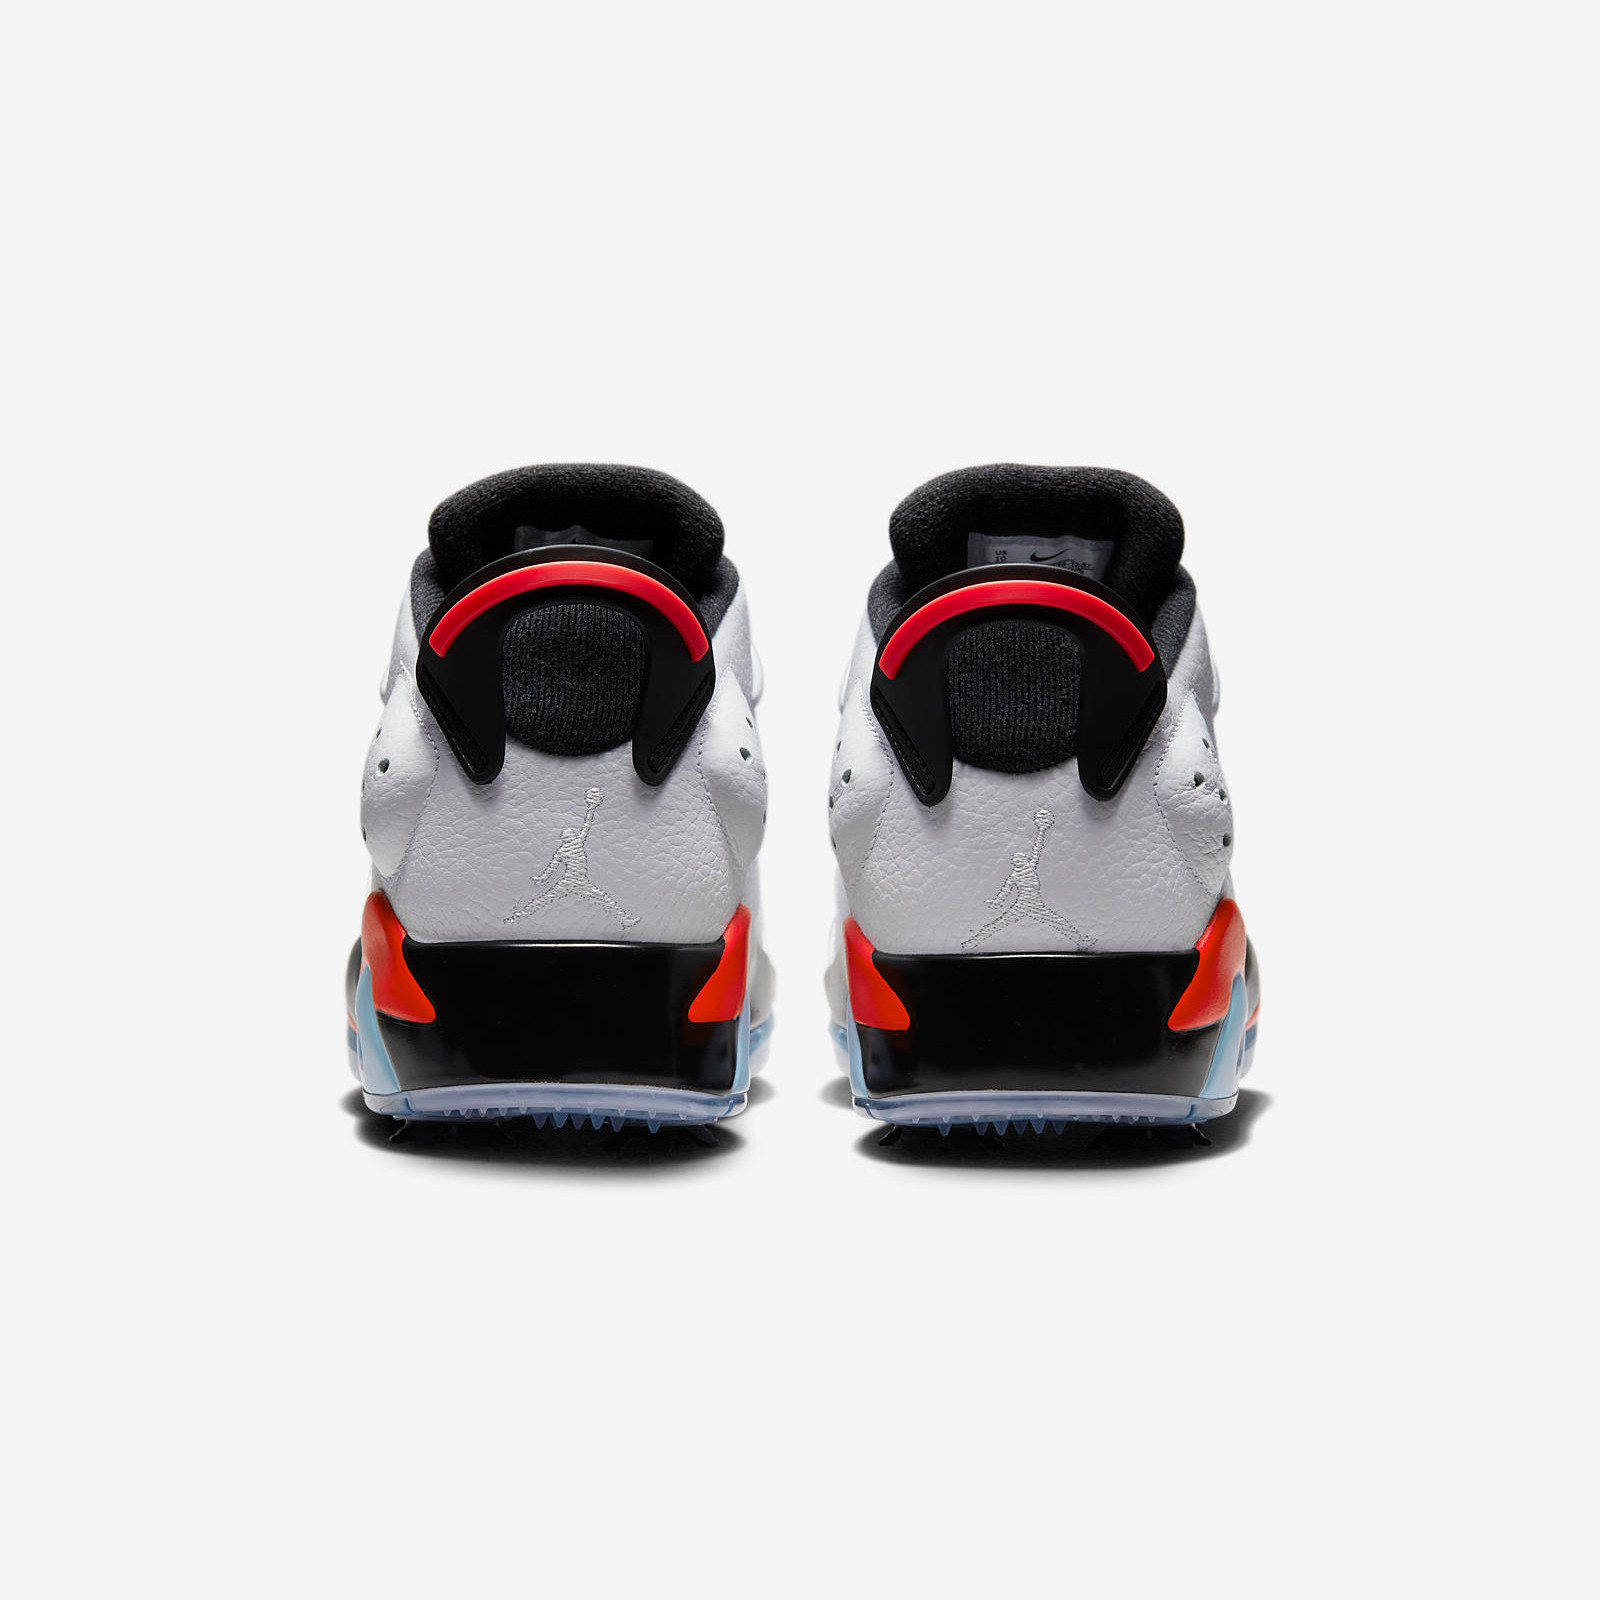 Air Jordan 6 Low Golf
« White / Infrared »